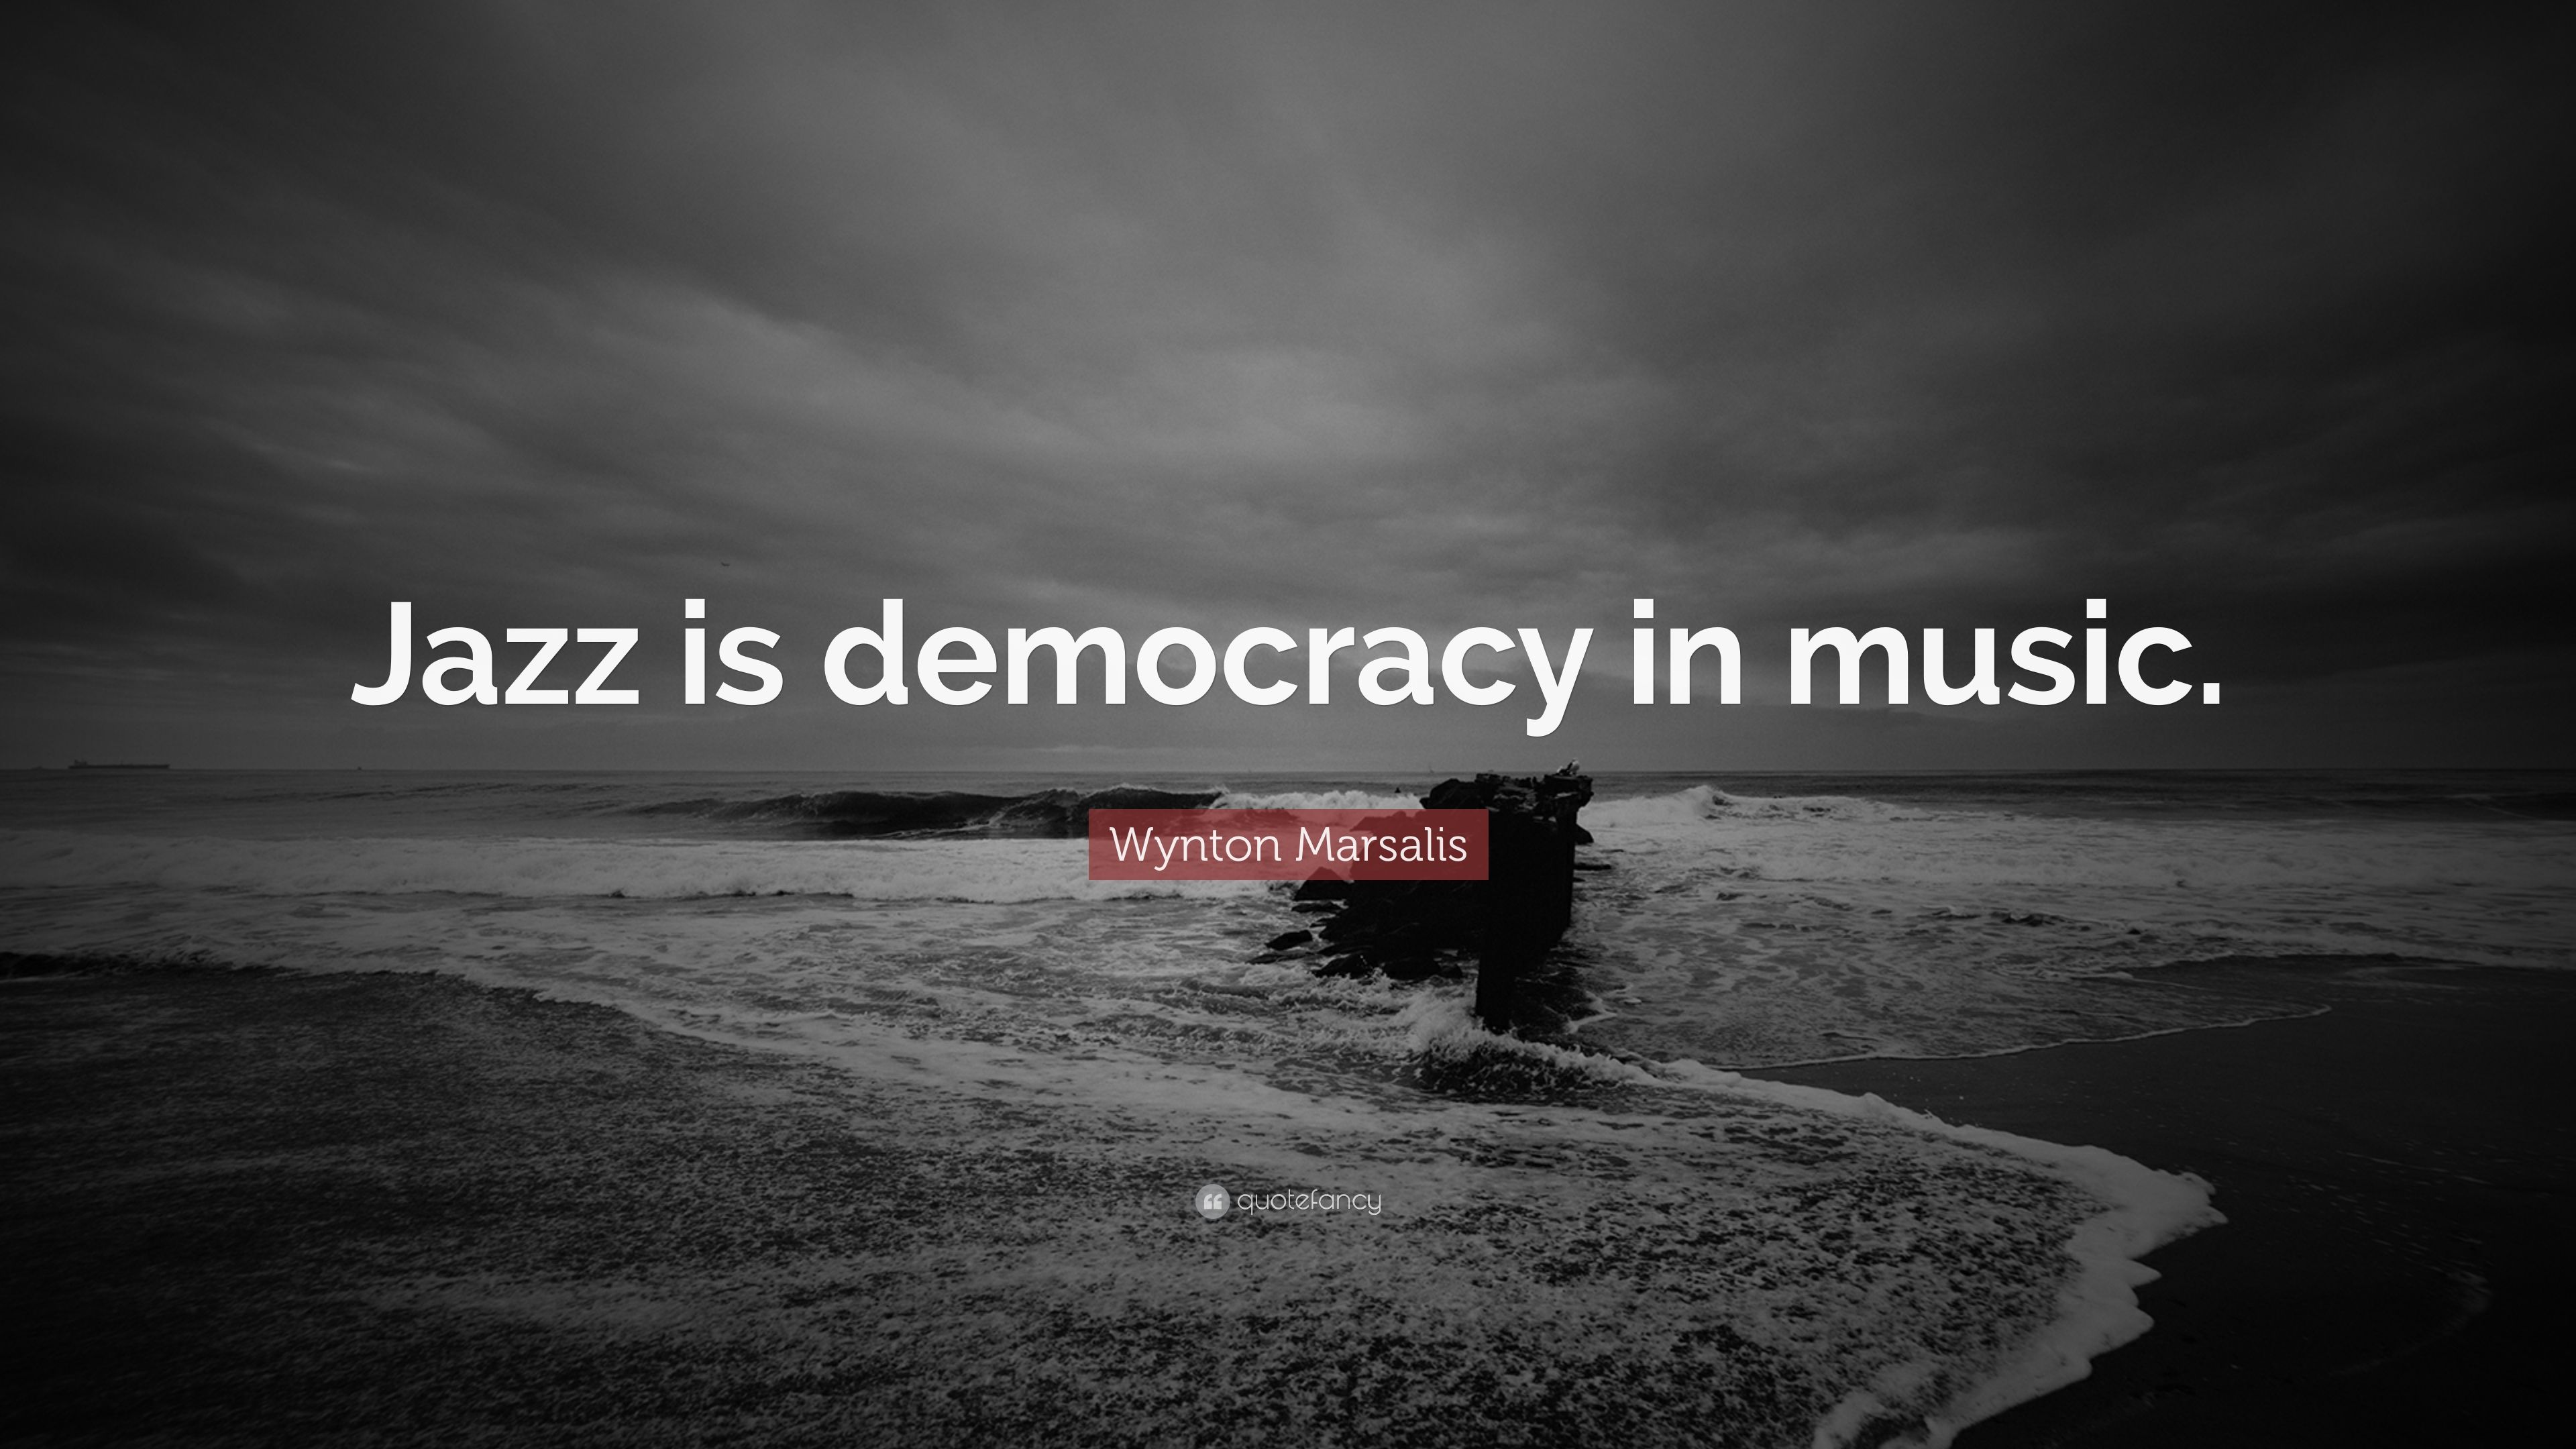 Wynton Marsalis Quote: “Jazz is democracy in music.” 9 wallpaper